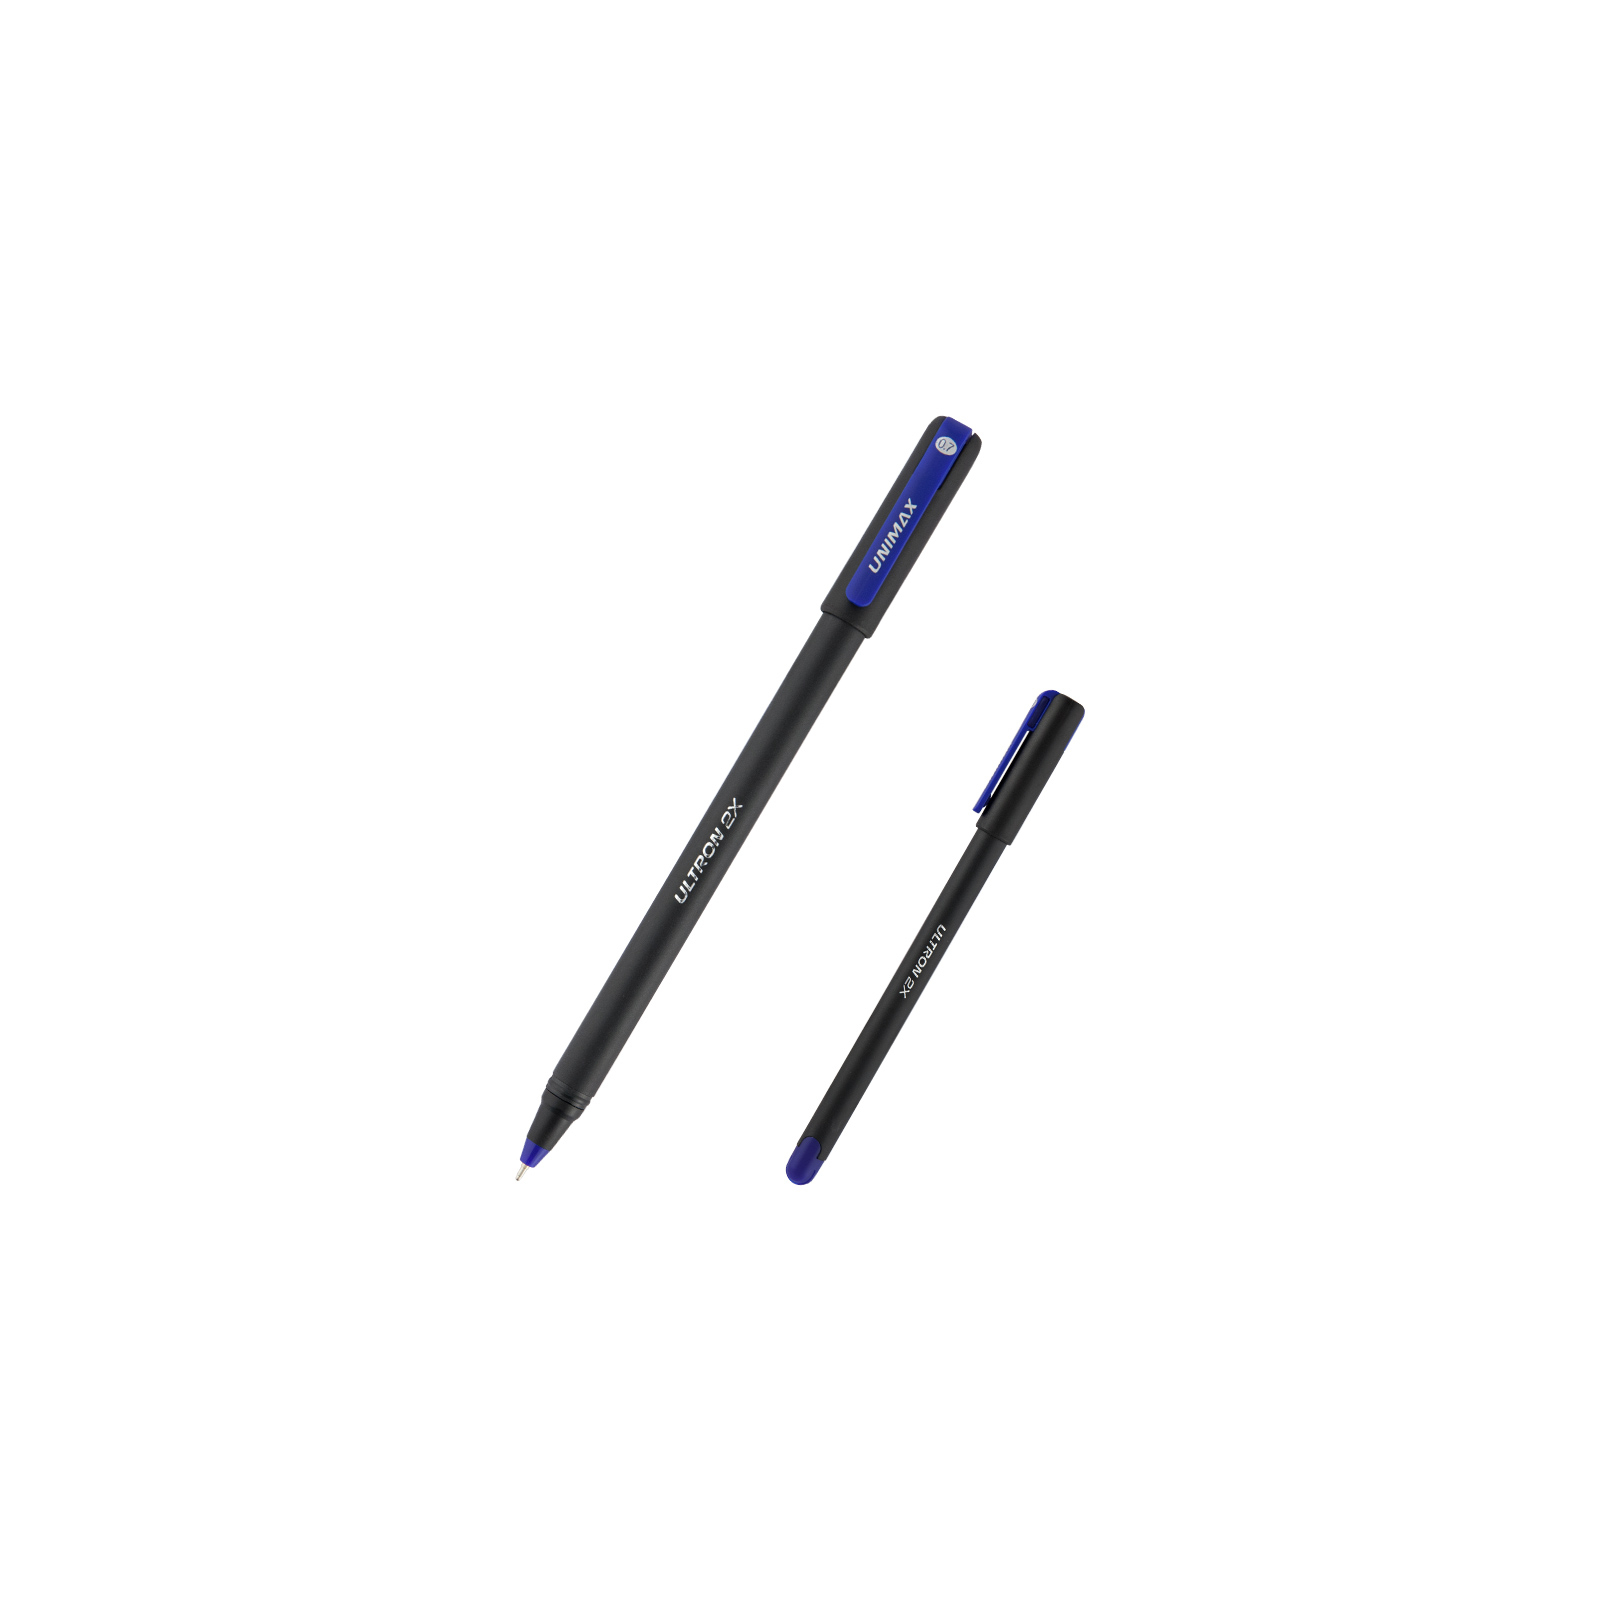 Ручка шариковая Unimax Ultron 2x, синяя (UX-146-01)